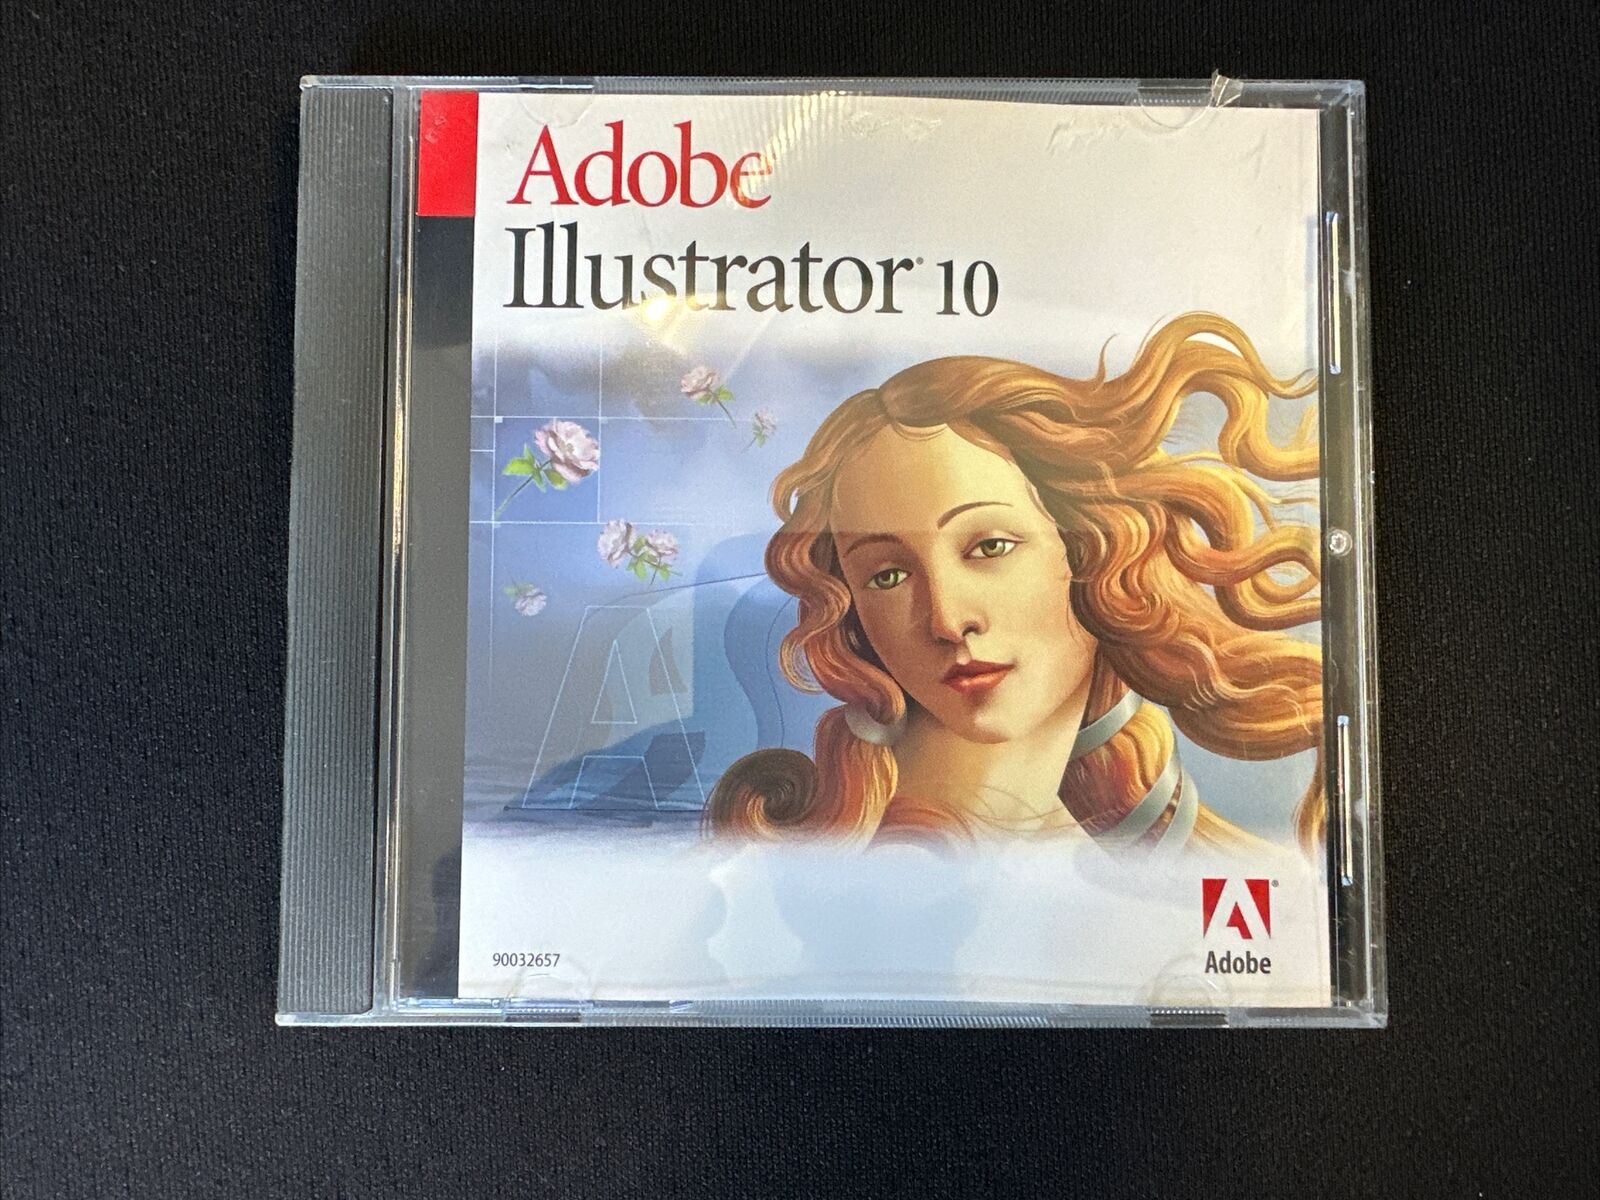 Adobe Illustrator 10 w/ Serial Number EDUCATION Edition - Windows CD